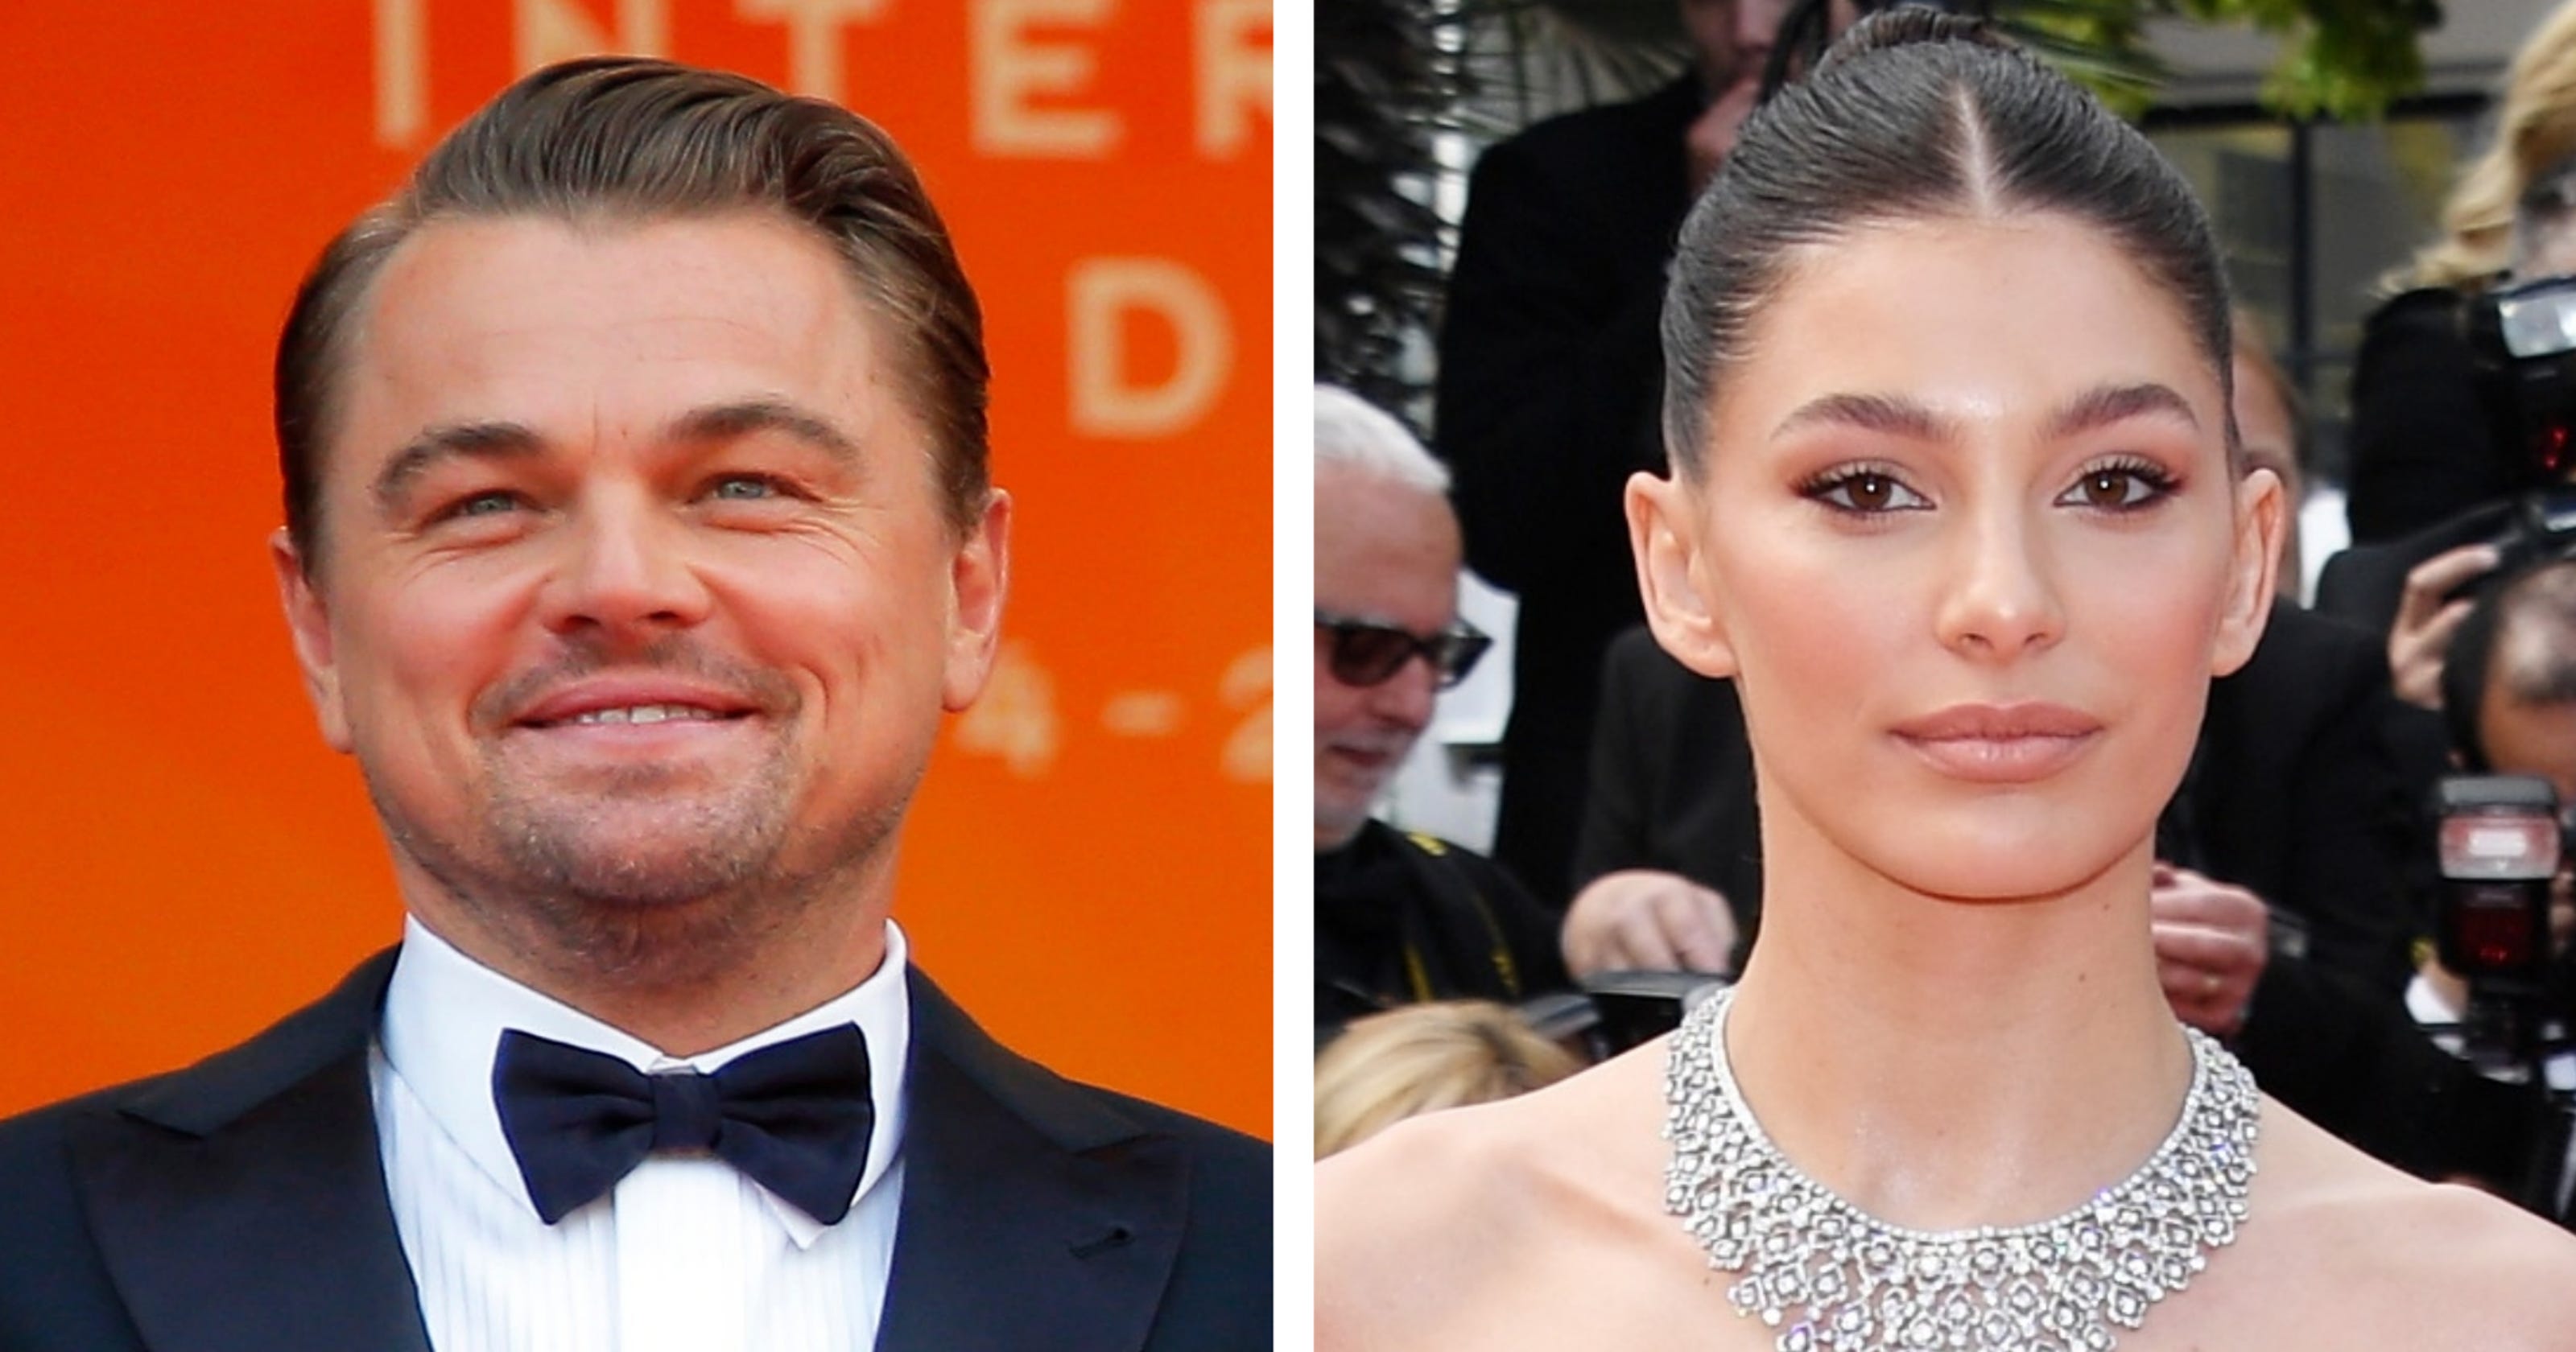 Leonardo DiCaprio's girlfriend Camila Morrone, 21, joins him at Cannes